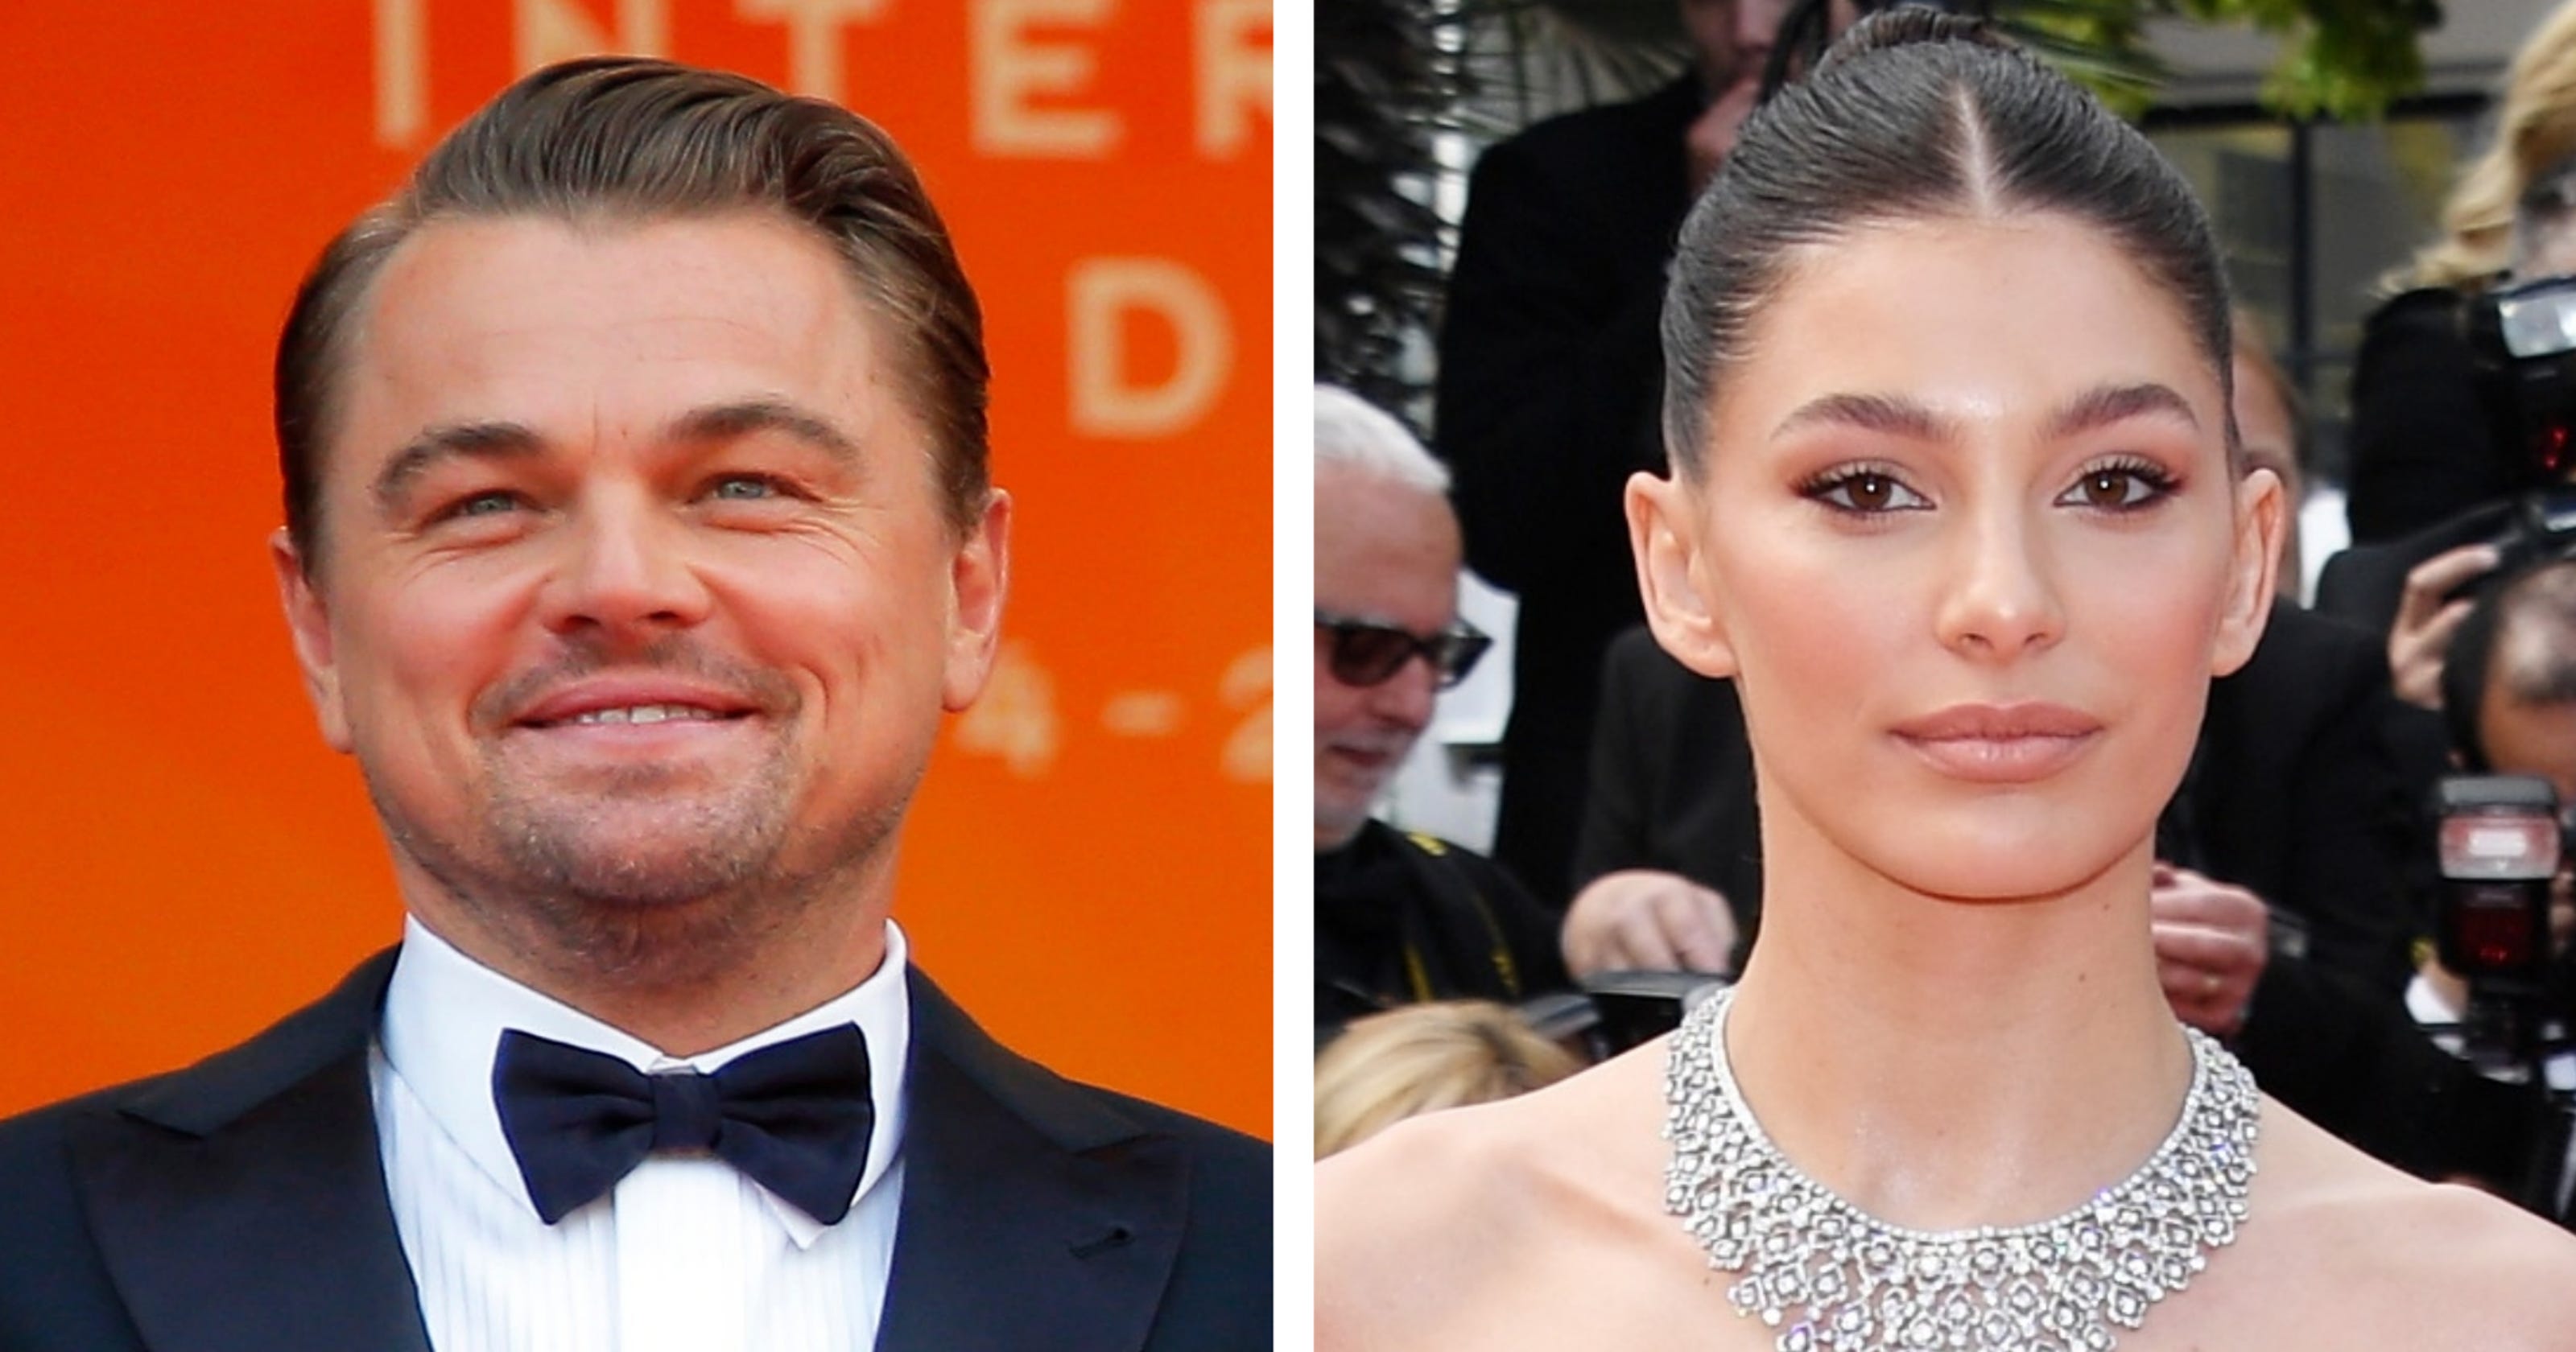 Leonardo DiCaprio's girlfriend Camila Morrone, 21, joins him at Cannes